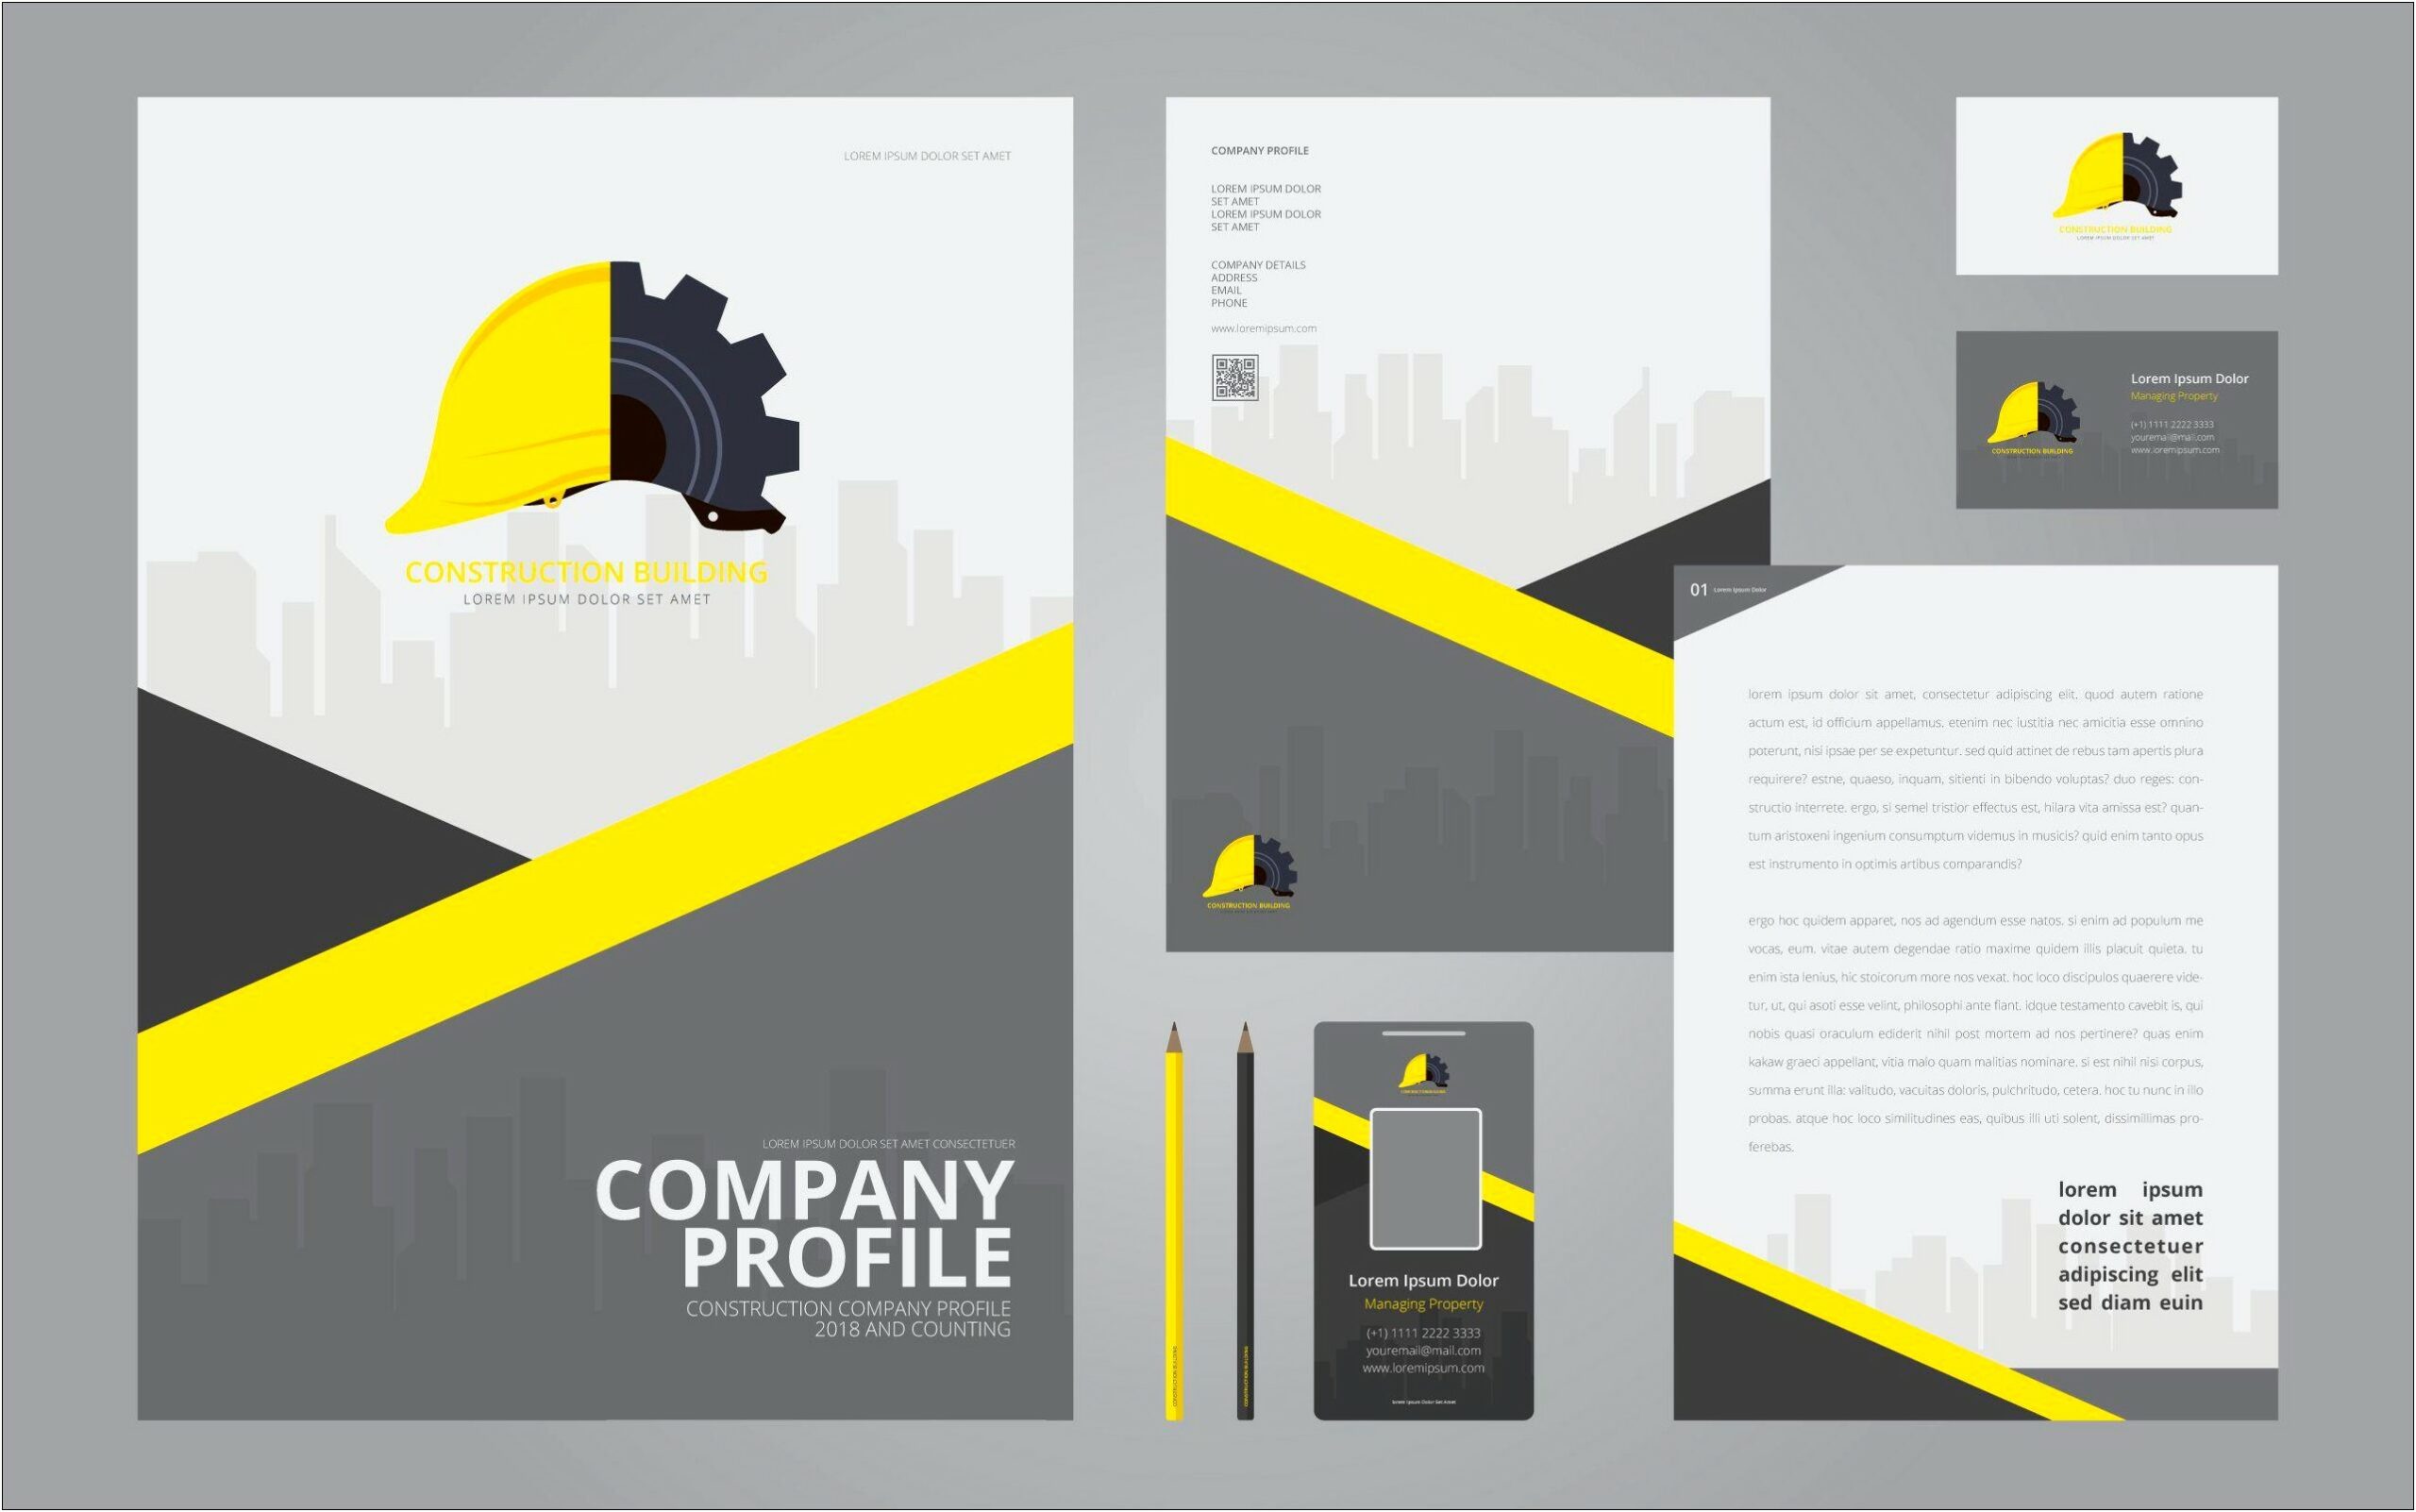 Construction Company Profile Design Template Free Download